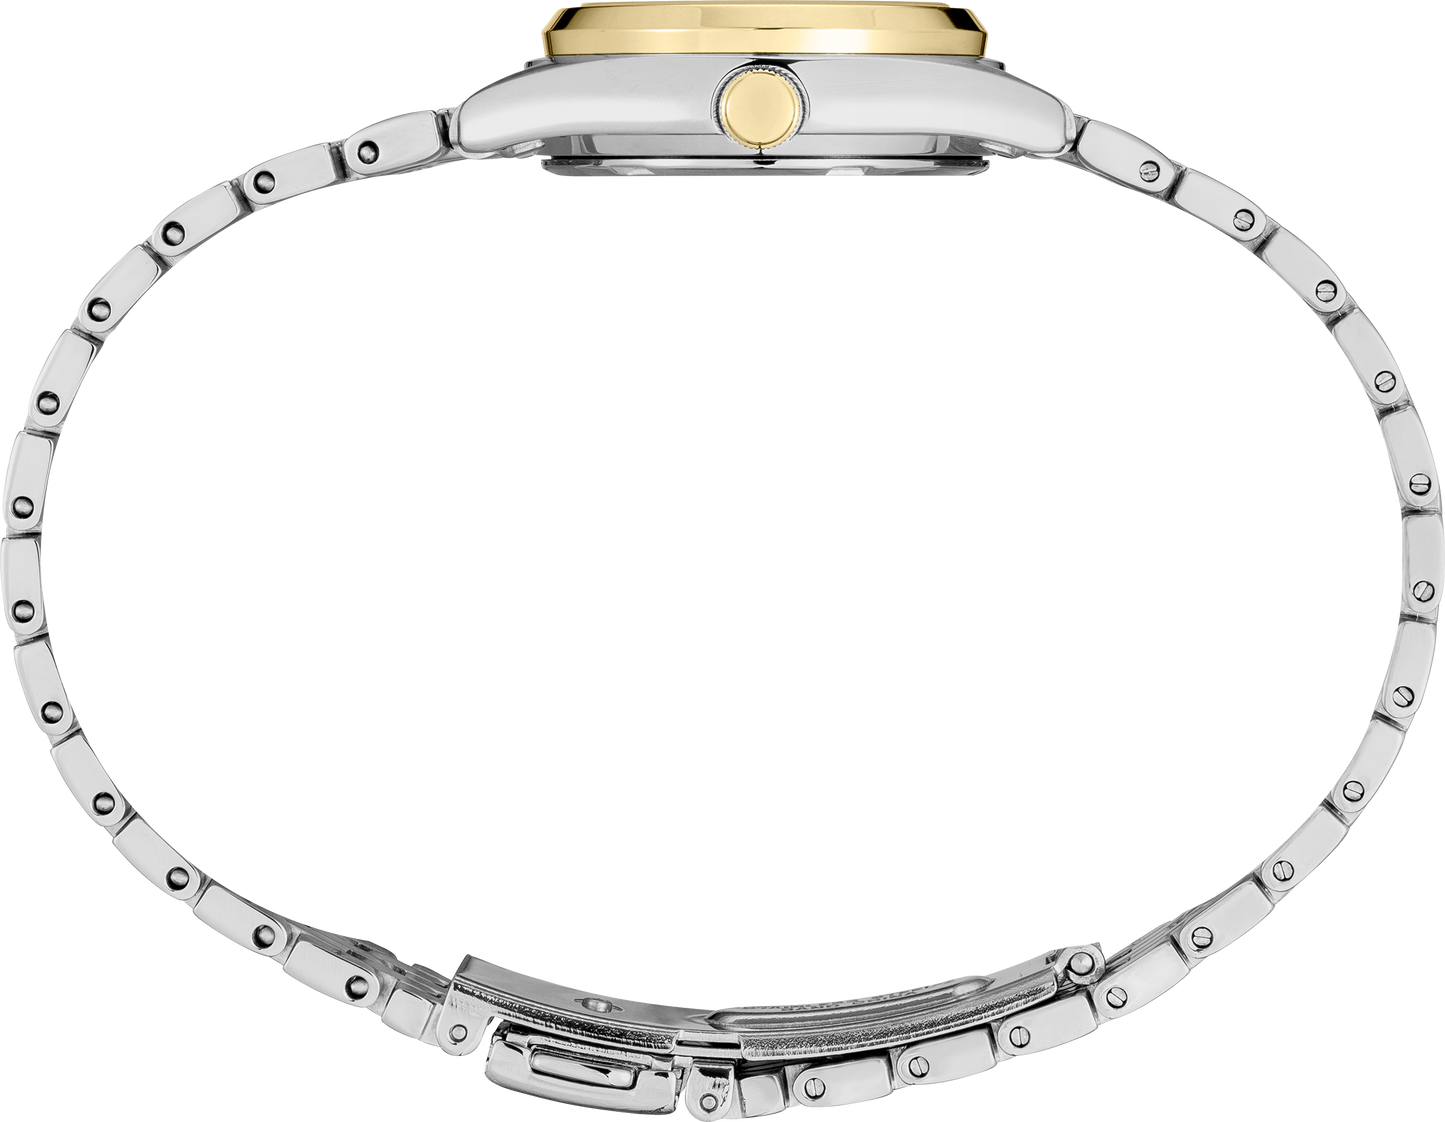 Seiko Essentials Womens Two Tone Stainless Steel Bracelet Watch SUR438